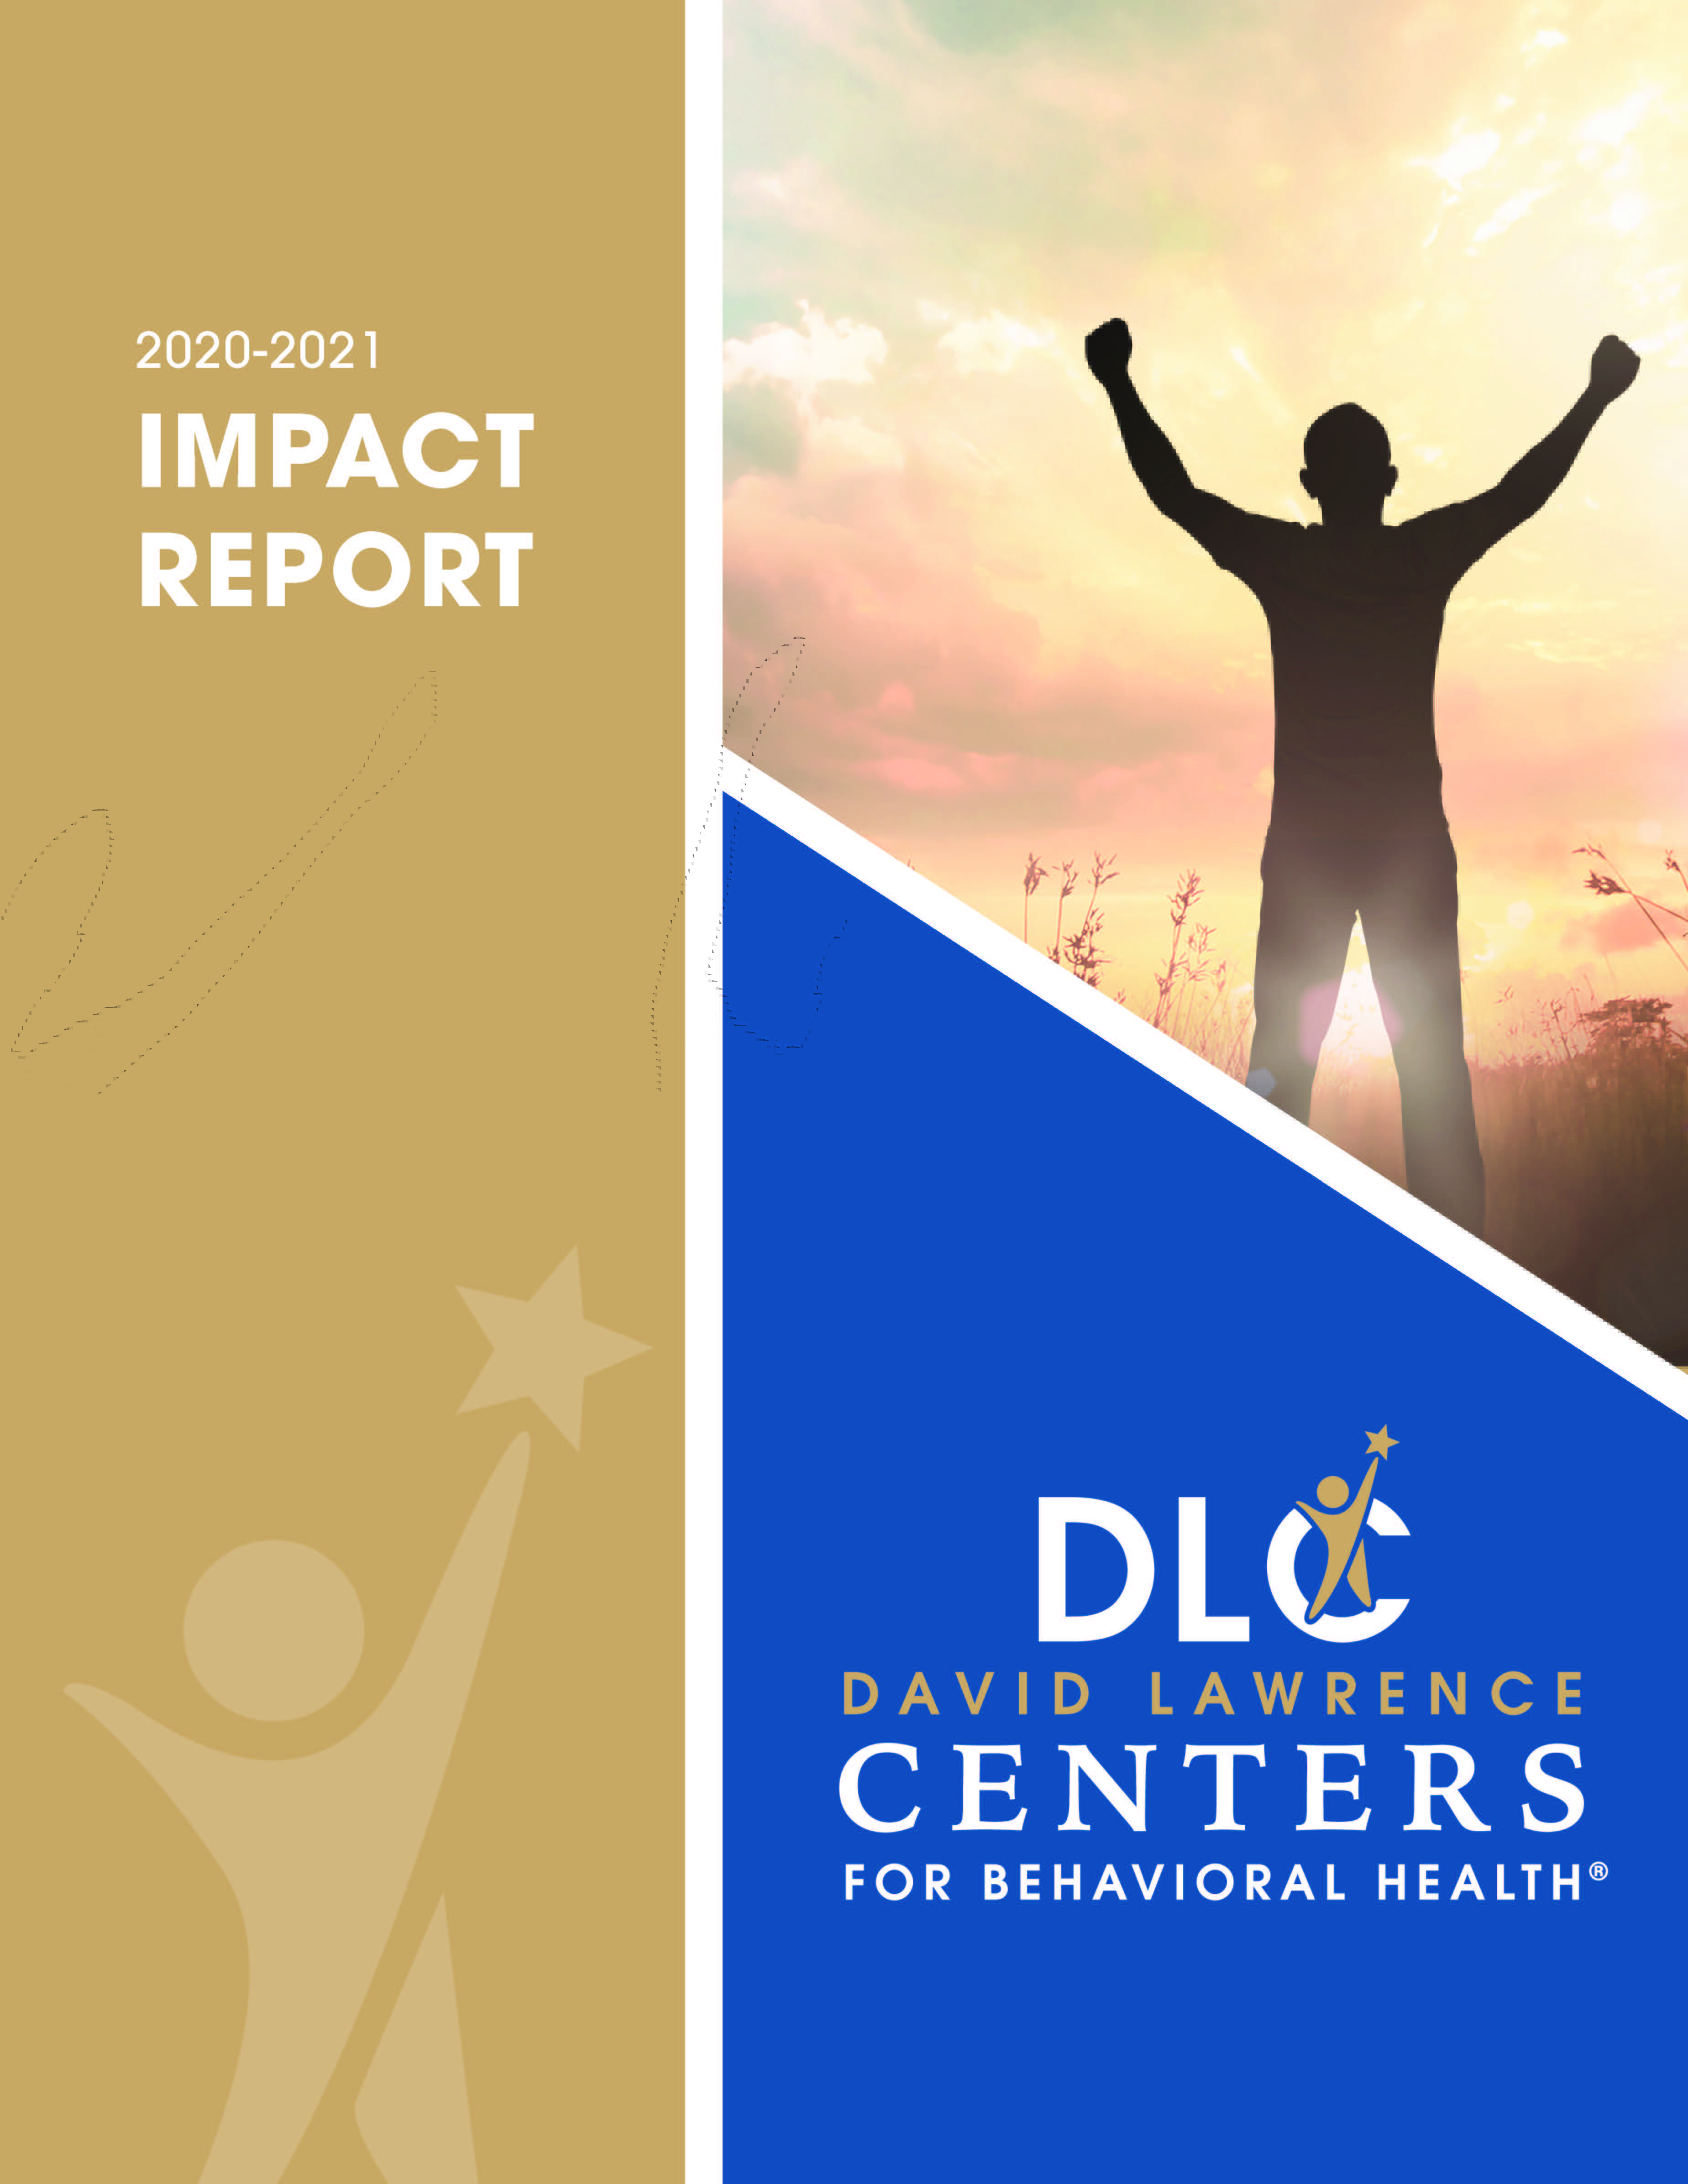 IMPACT REPORT 2020-2021